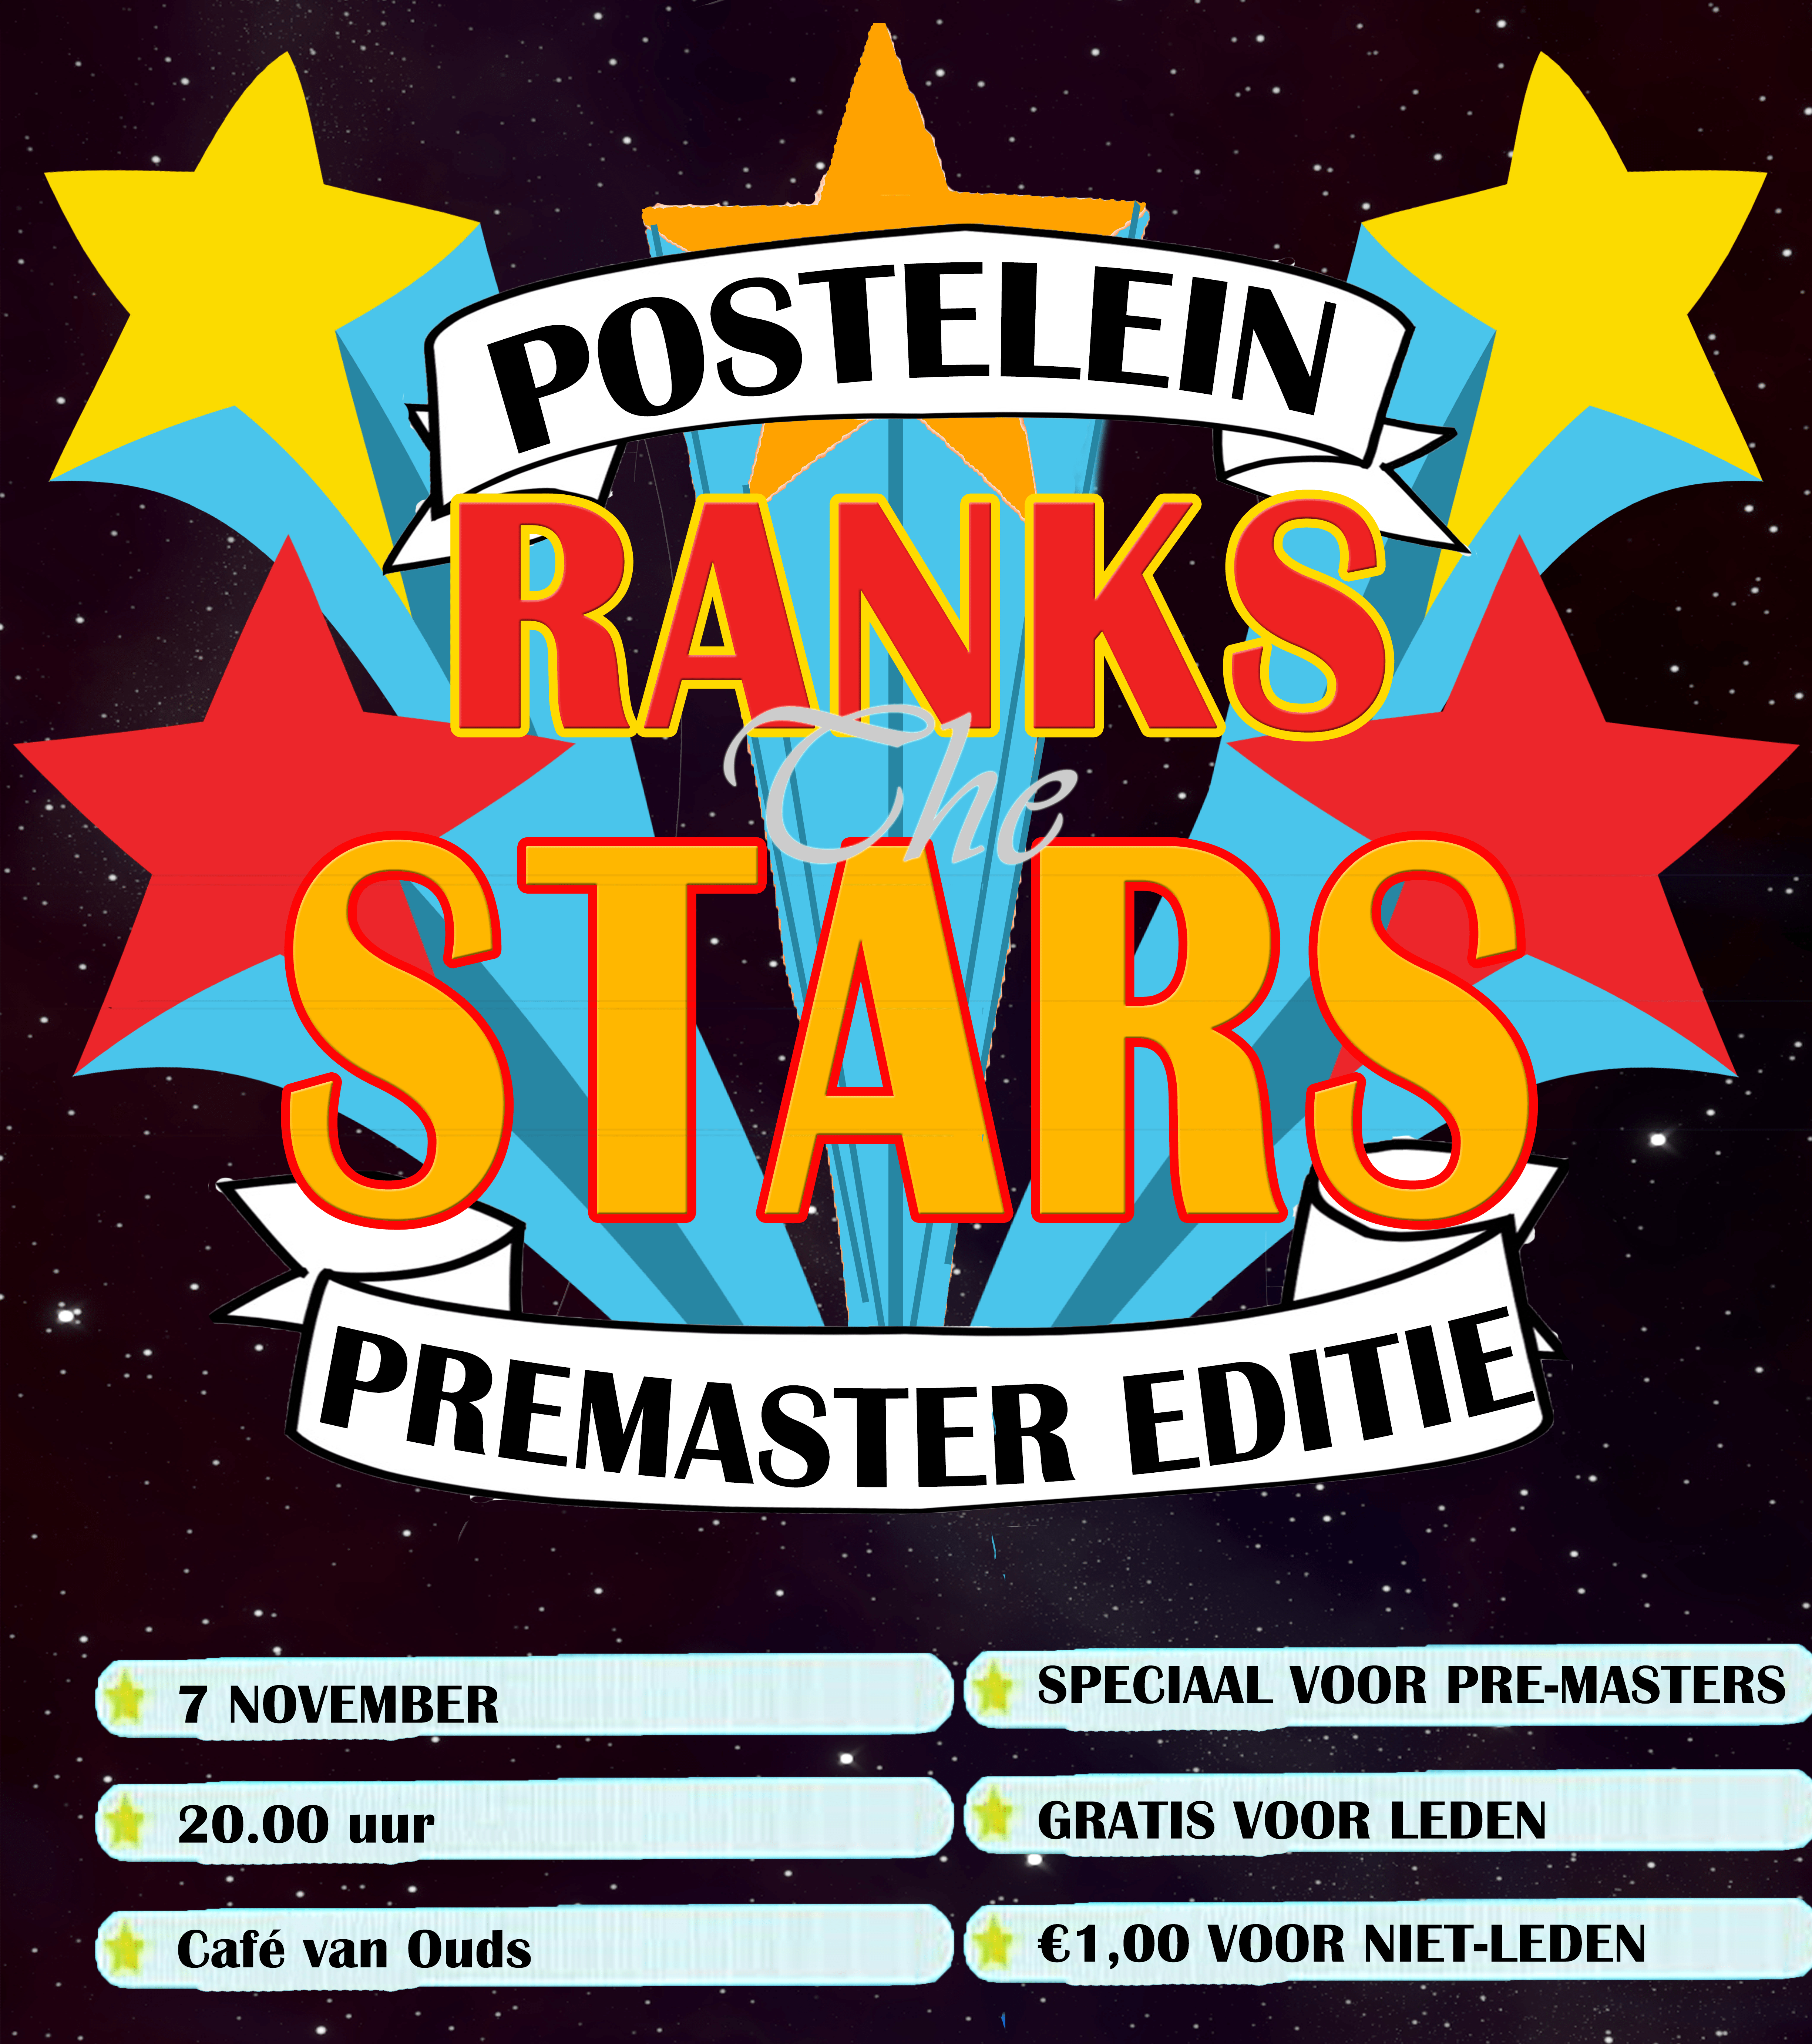 Postelein ranks the stars